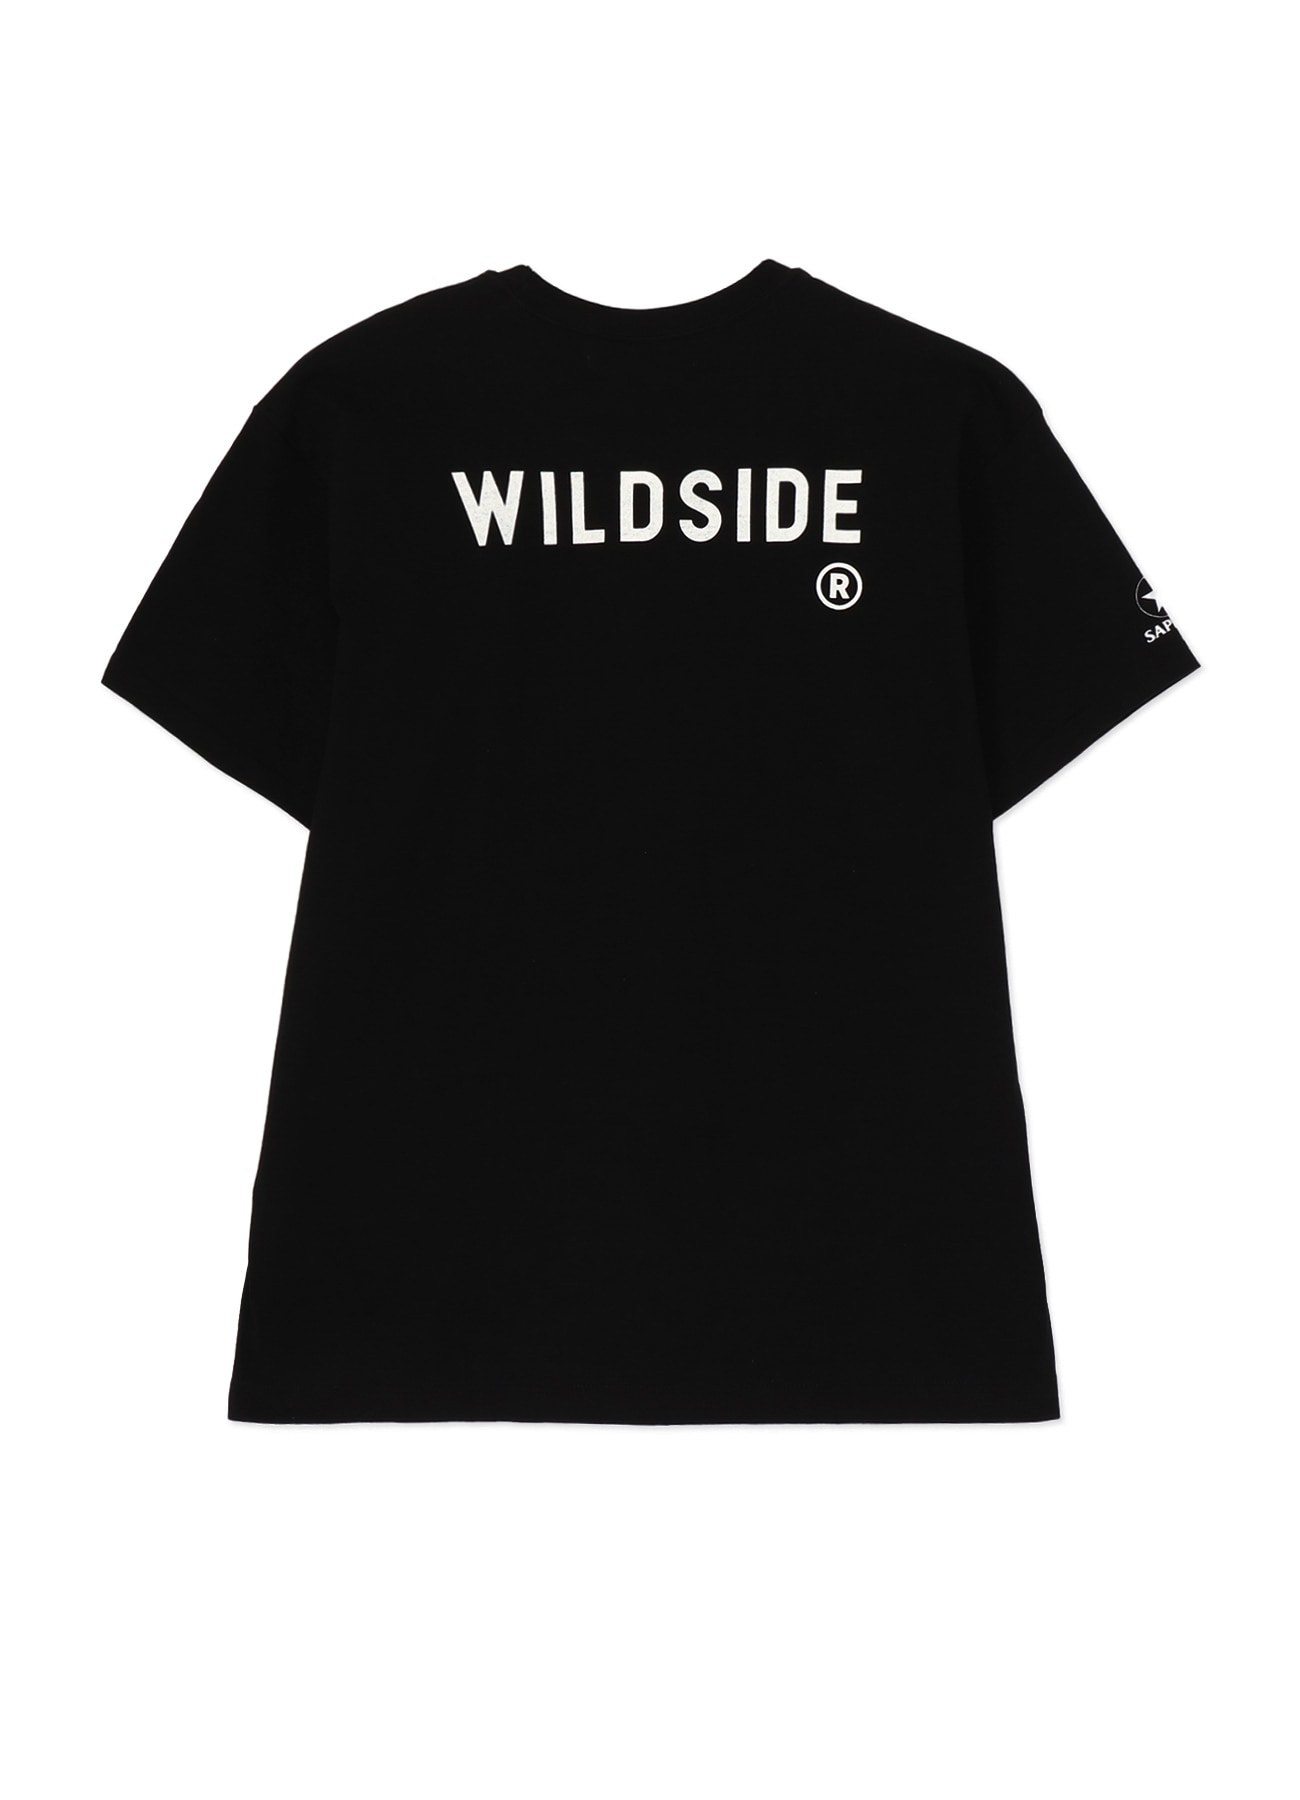 WILDSIDE YOHJI YAMAMOTO × Sapporo Draft Beer Black Label Collaboration  T-shirt TYPE 1(Purple)